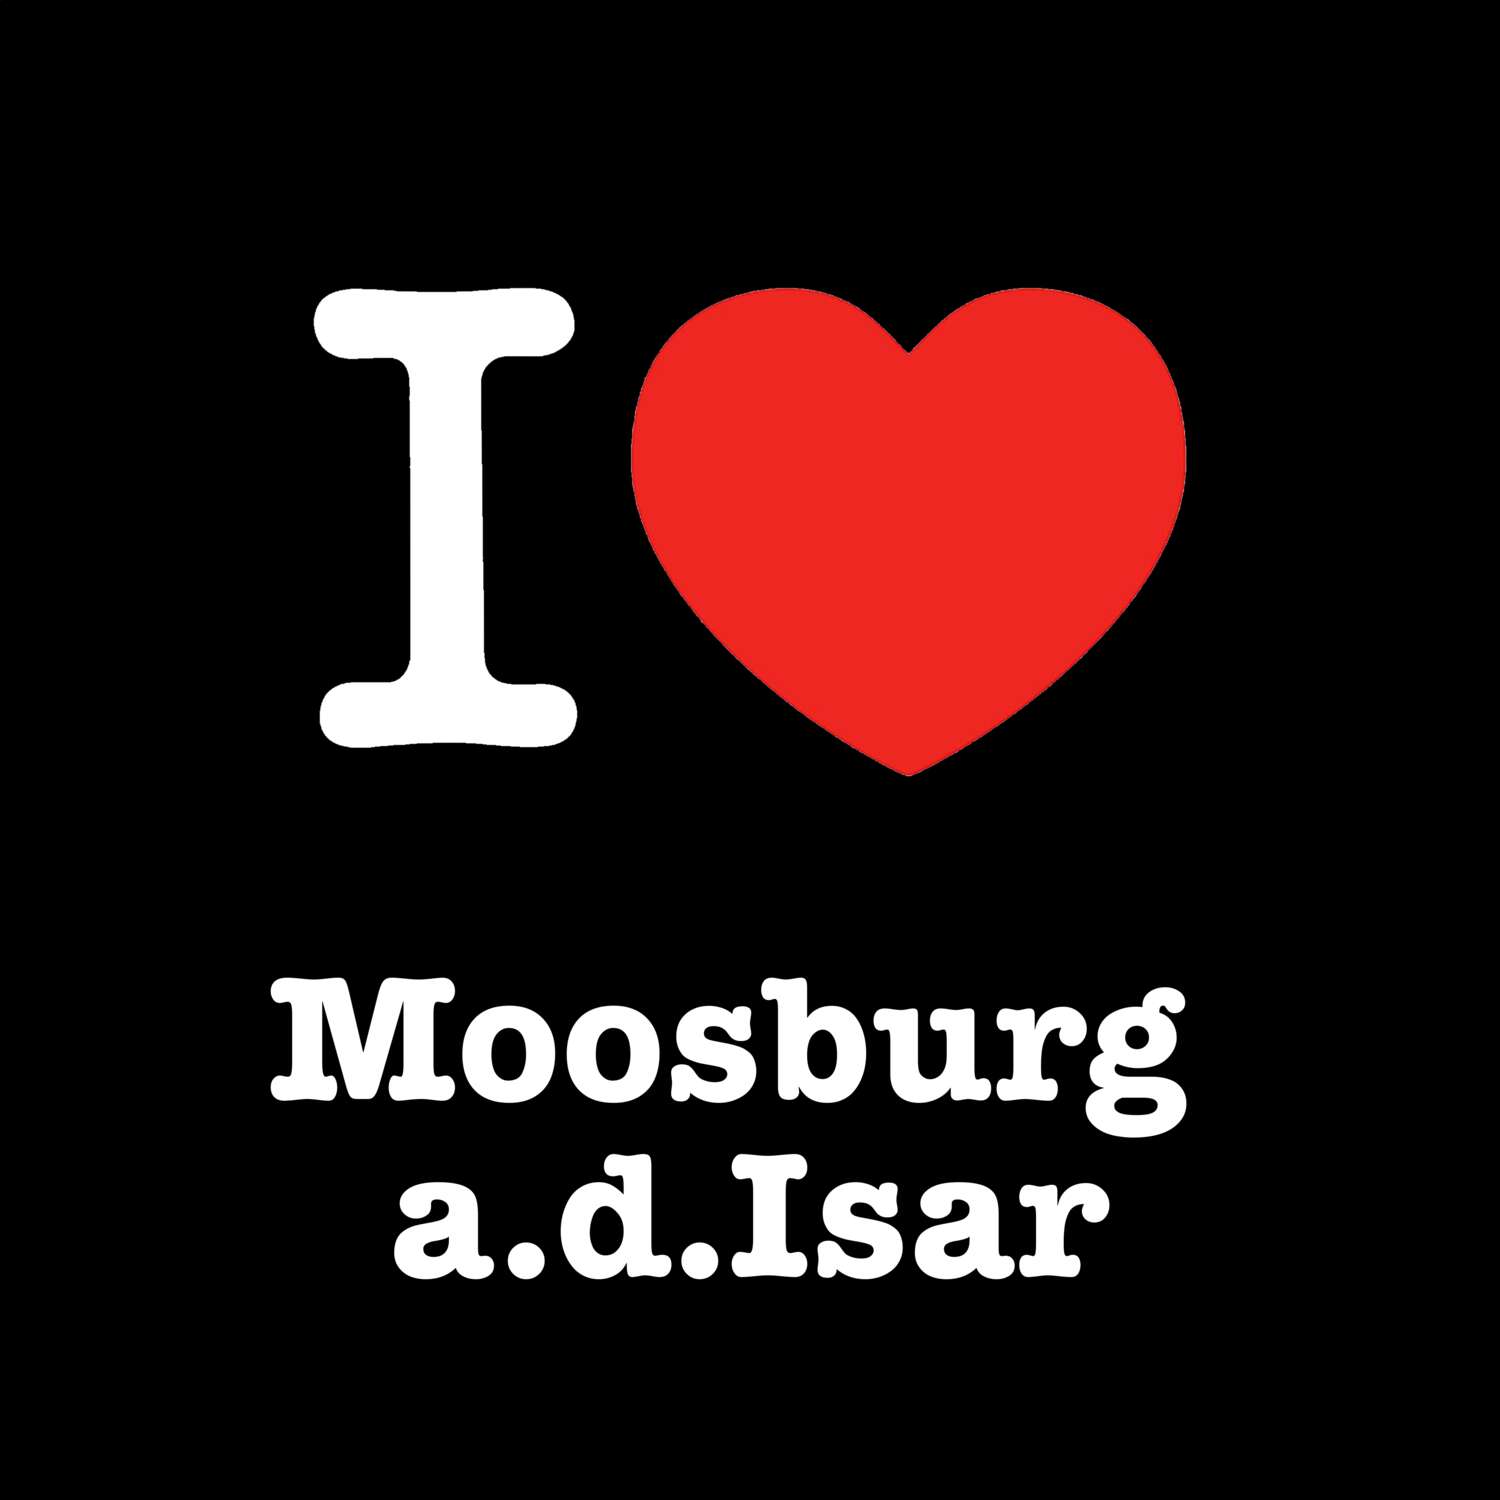 Moosburg a.d.Isar T-Shirt »I love«